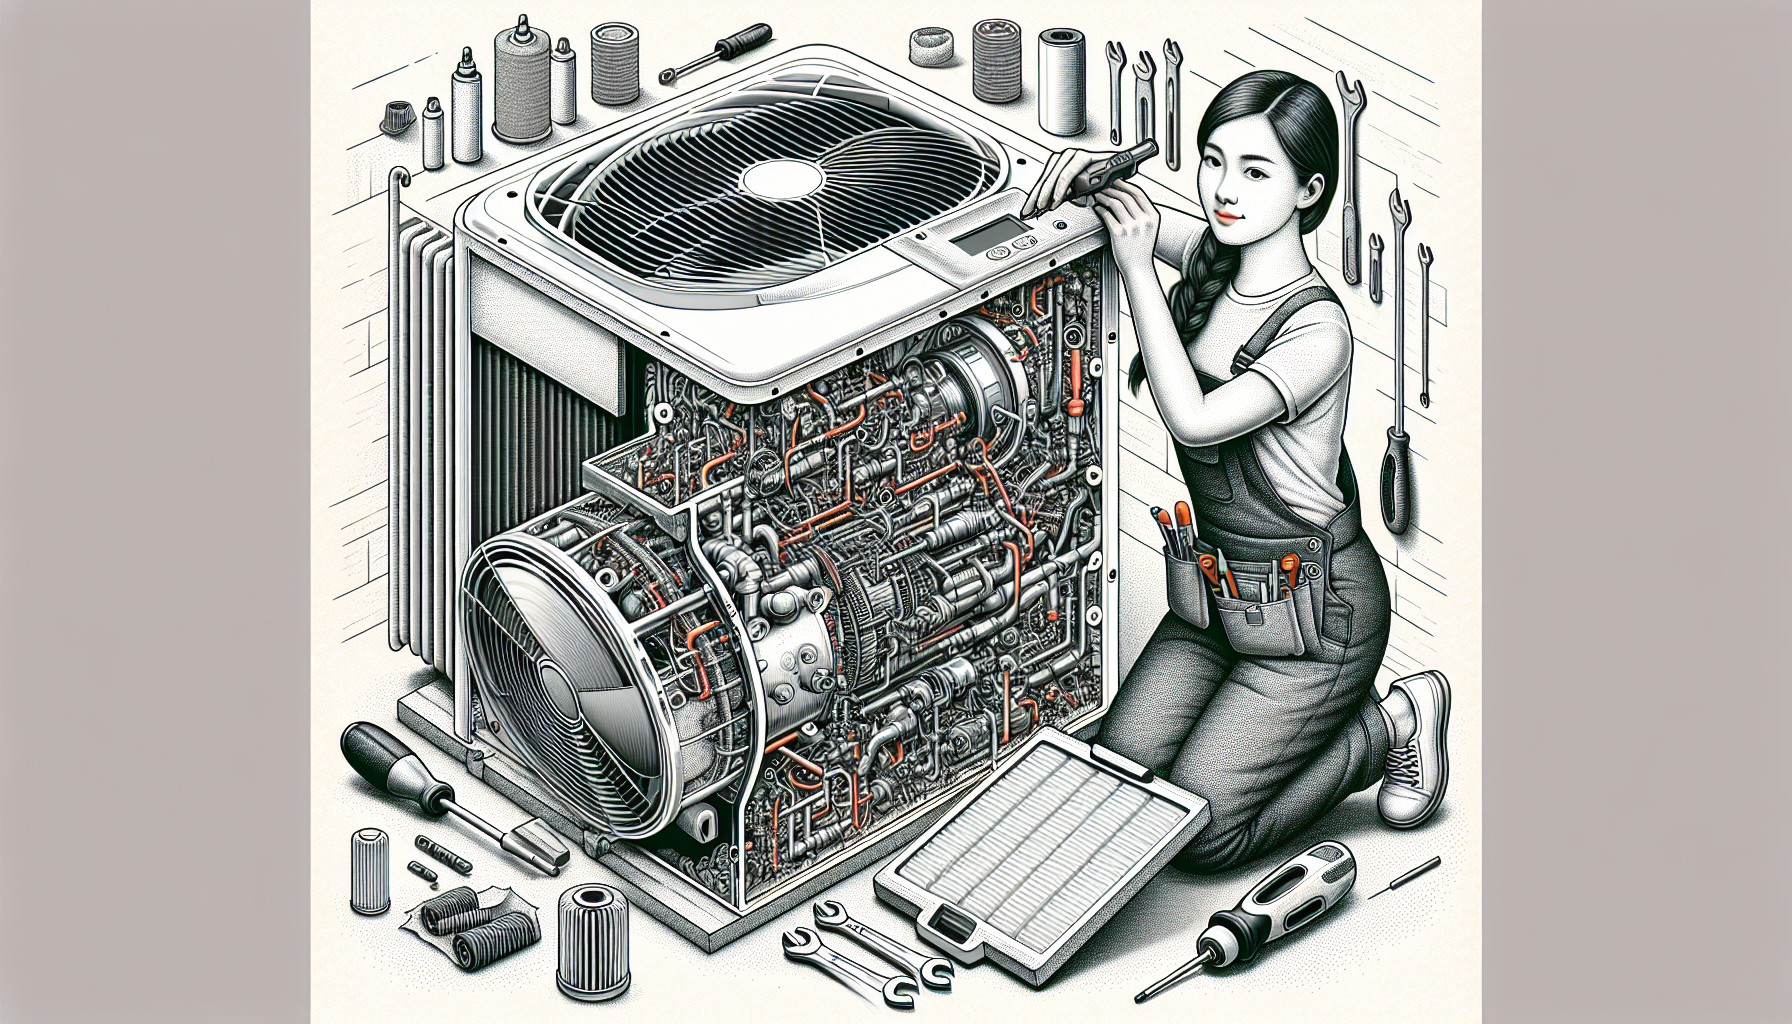 Illustration of regular maintenance and servicing of a heat pump system